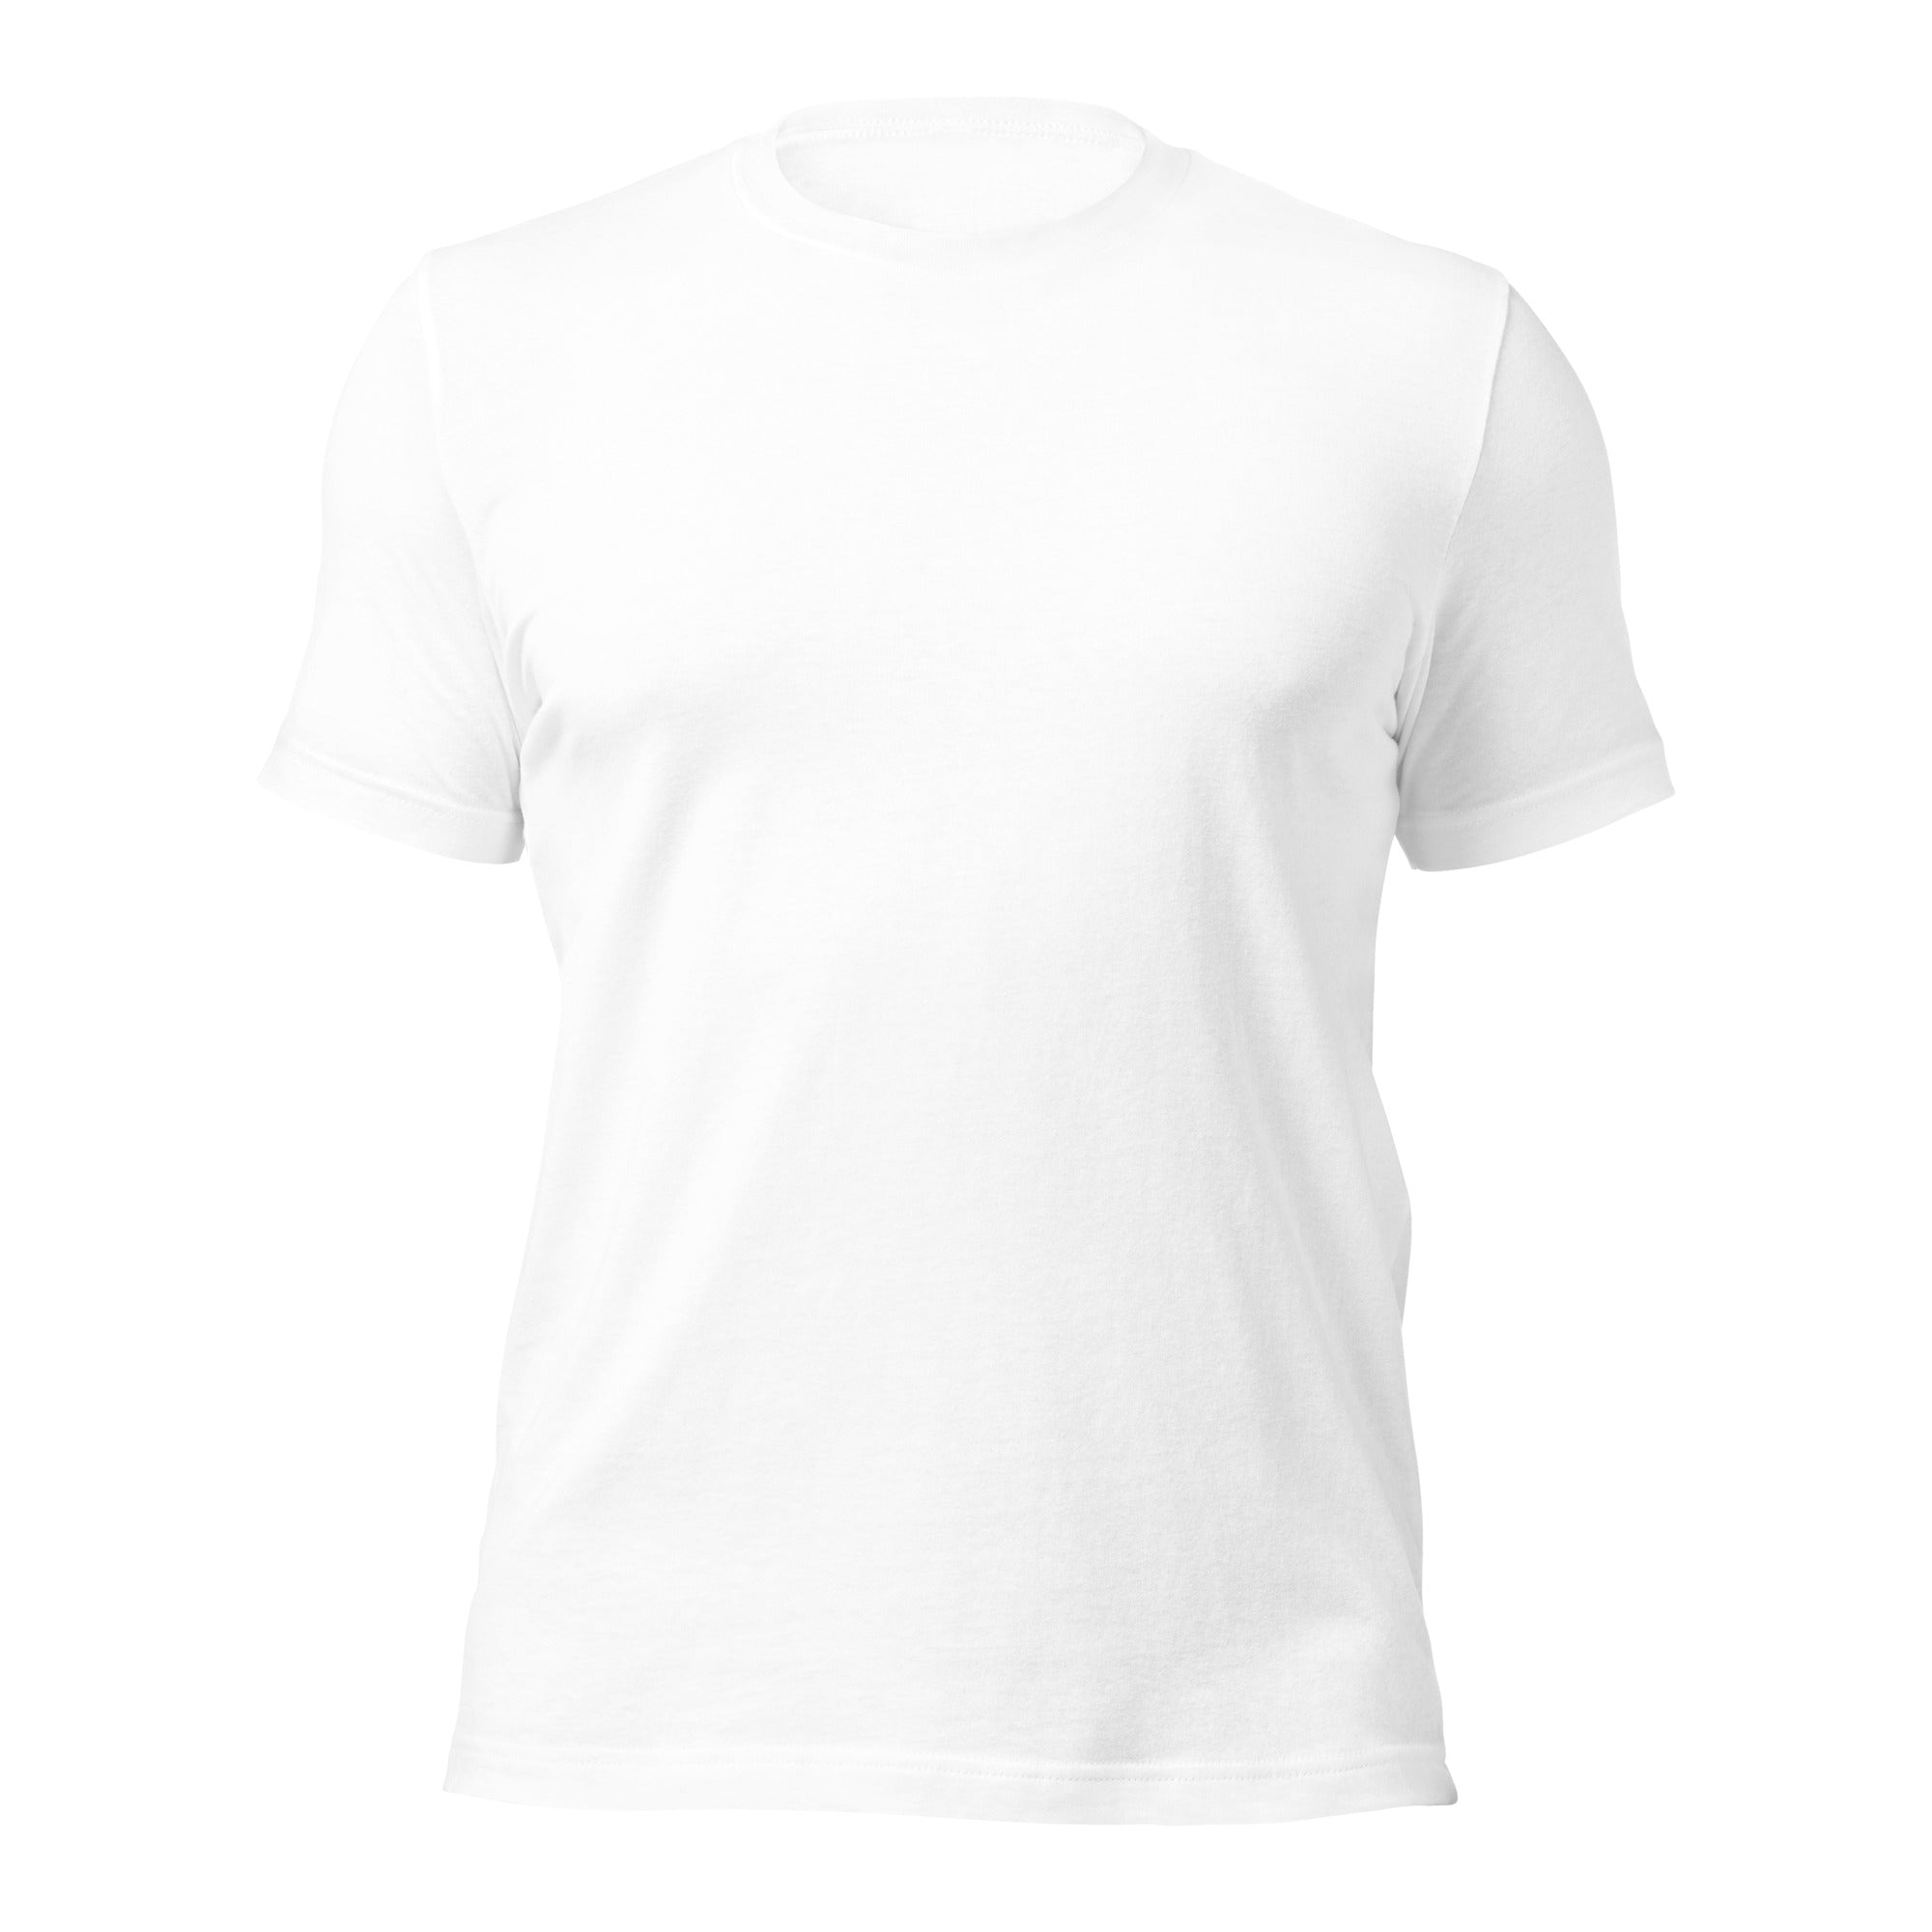 Pomsky - Short Sleeve Cotton Tee Shirt